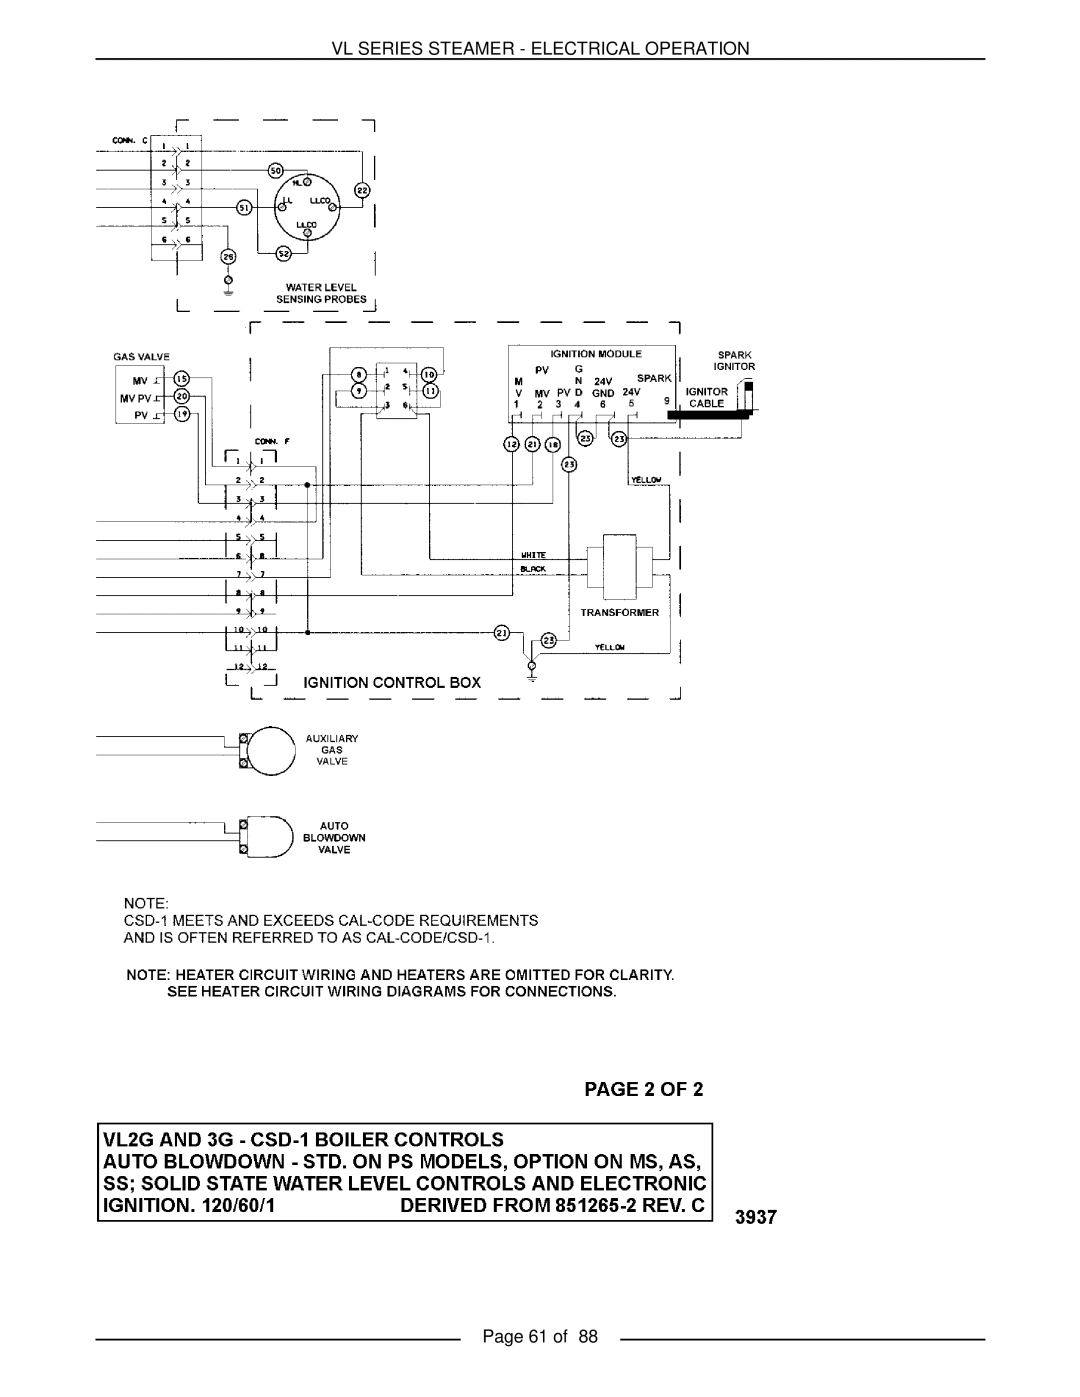 Vulcan-Hart VL3GSS, VL3GMS, VL2GMS, VL3GAS, VL2GAS, VL2GSS, VL3GPS, VL2GPS Vl Series Steamer - Electrical Operation, Page 61 of 